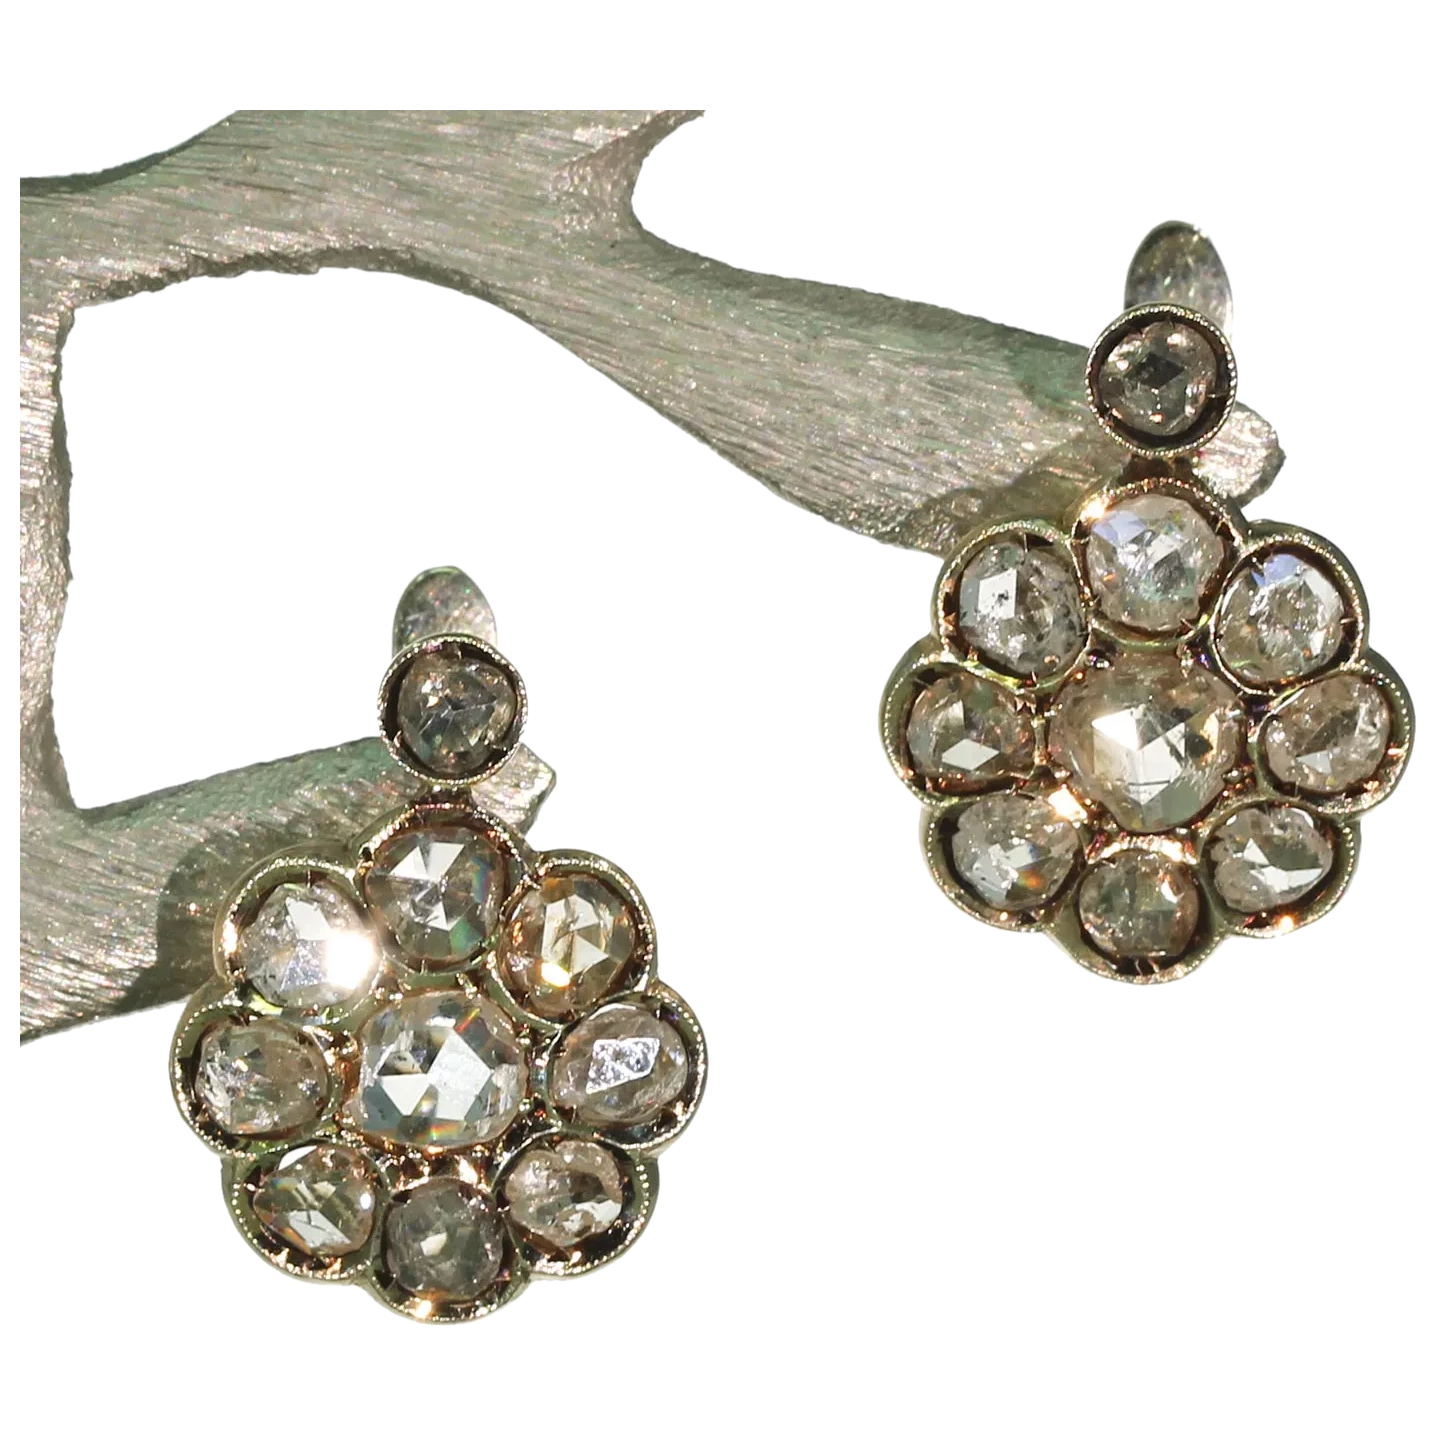 1.5 Carat Victorian Rose Cut Diamond Drop Earrings 18K Yellow Gold